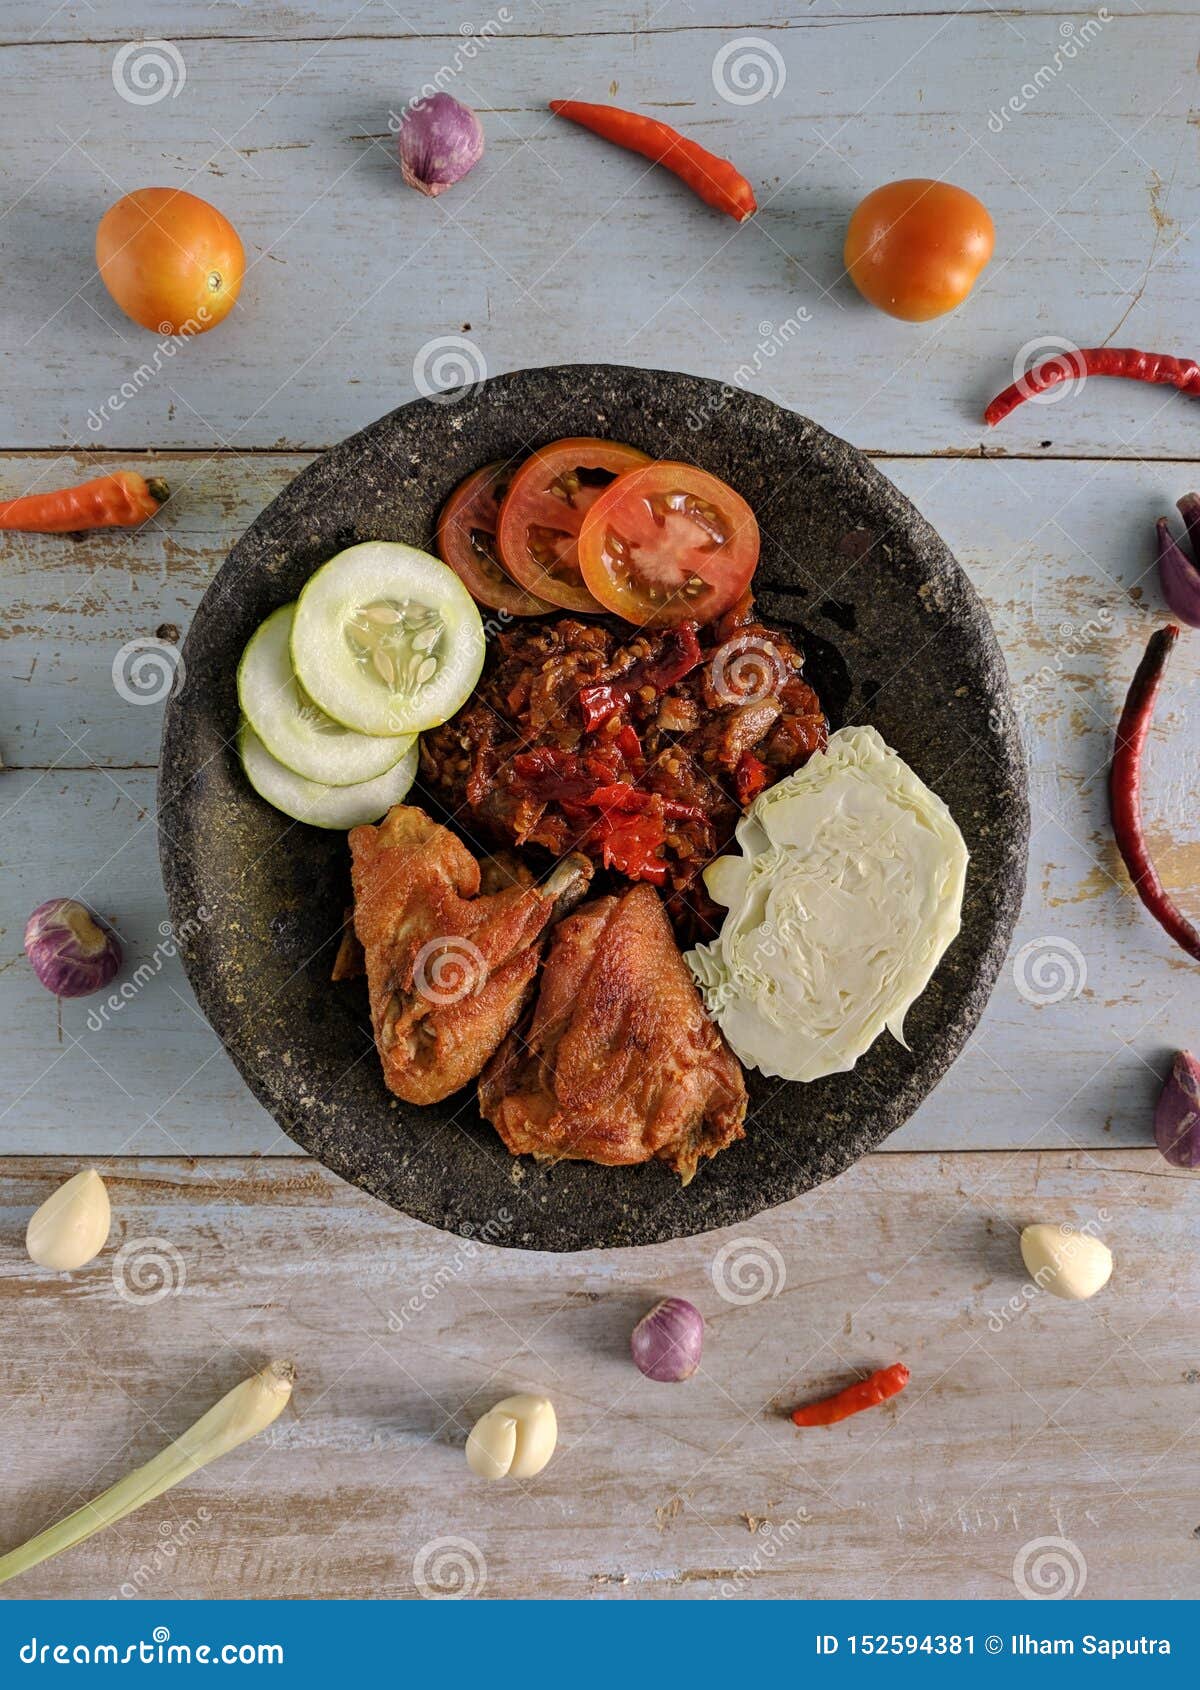 Ayam Penyet Is Indonesian Traditional Food Stock Image Image Of Object Cursine 152594381